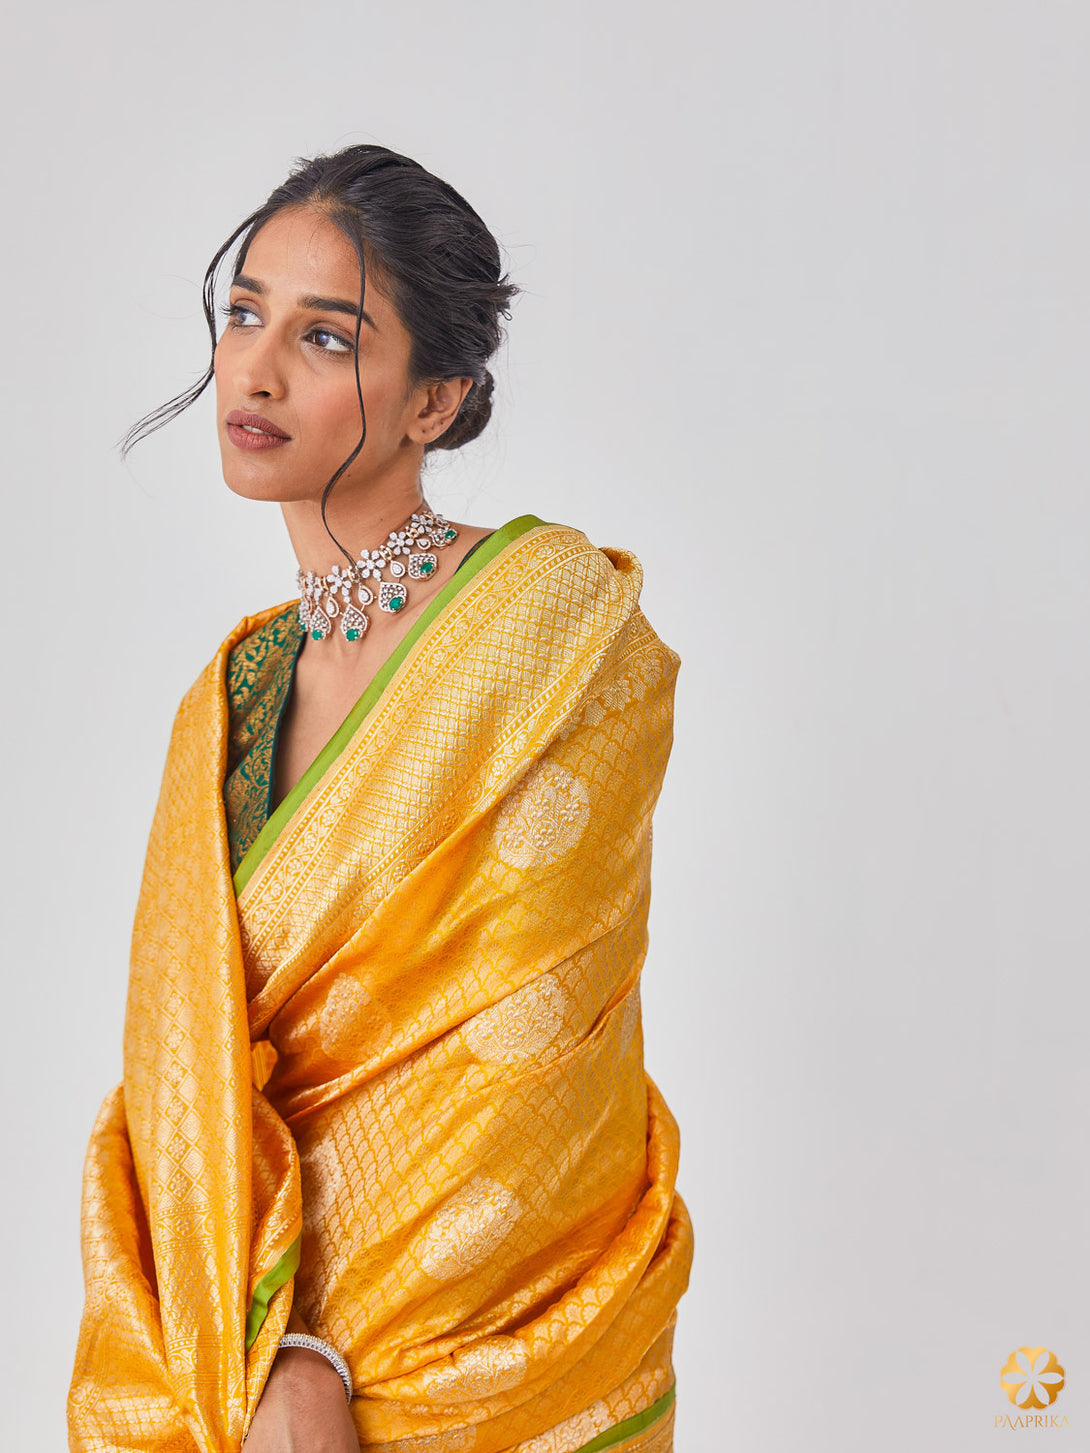 Beautiful Drape of Luxurious Sandal Yellow Banarasi Saree - Timeless Beauty and Grace.